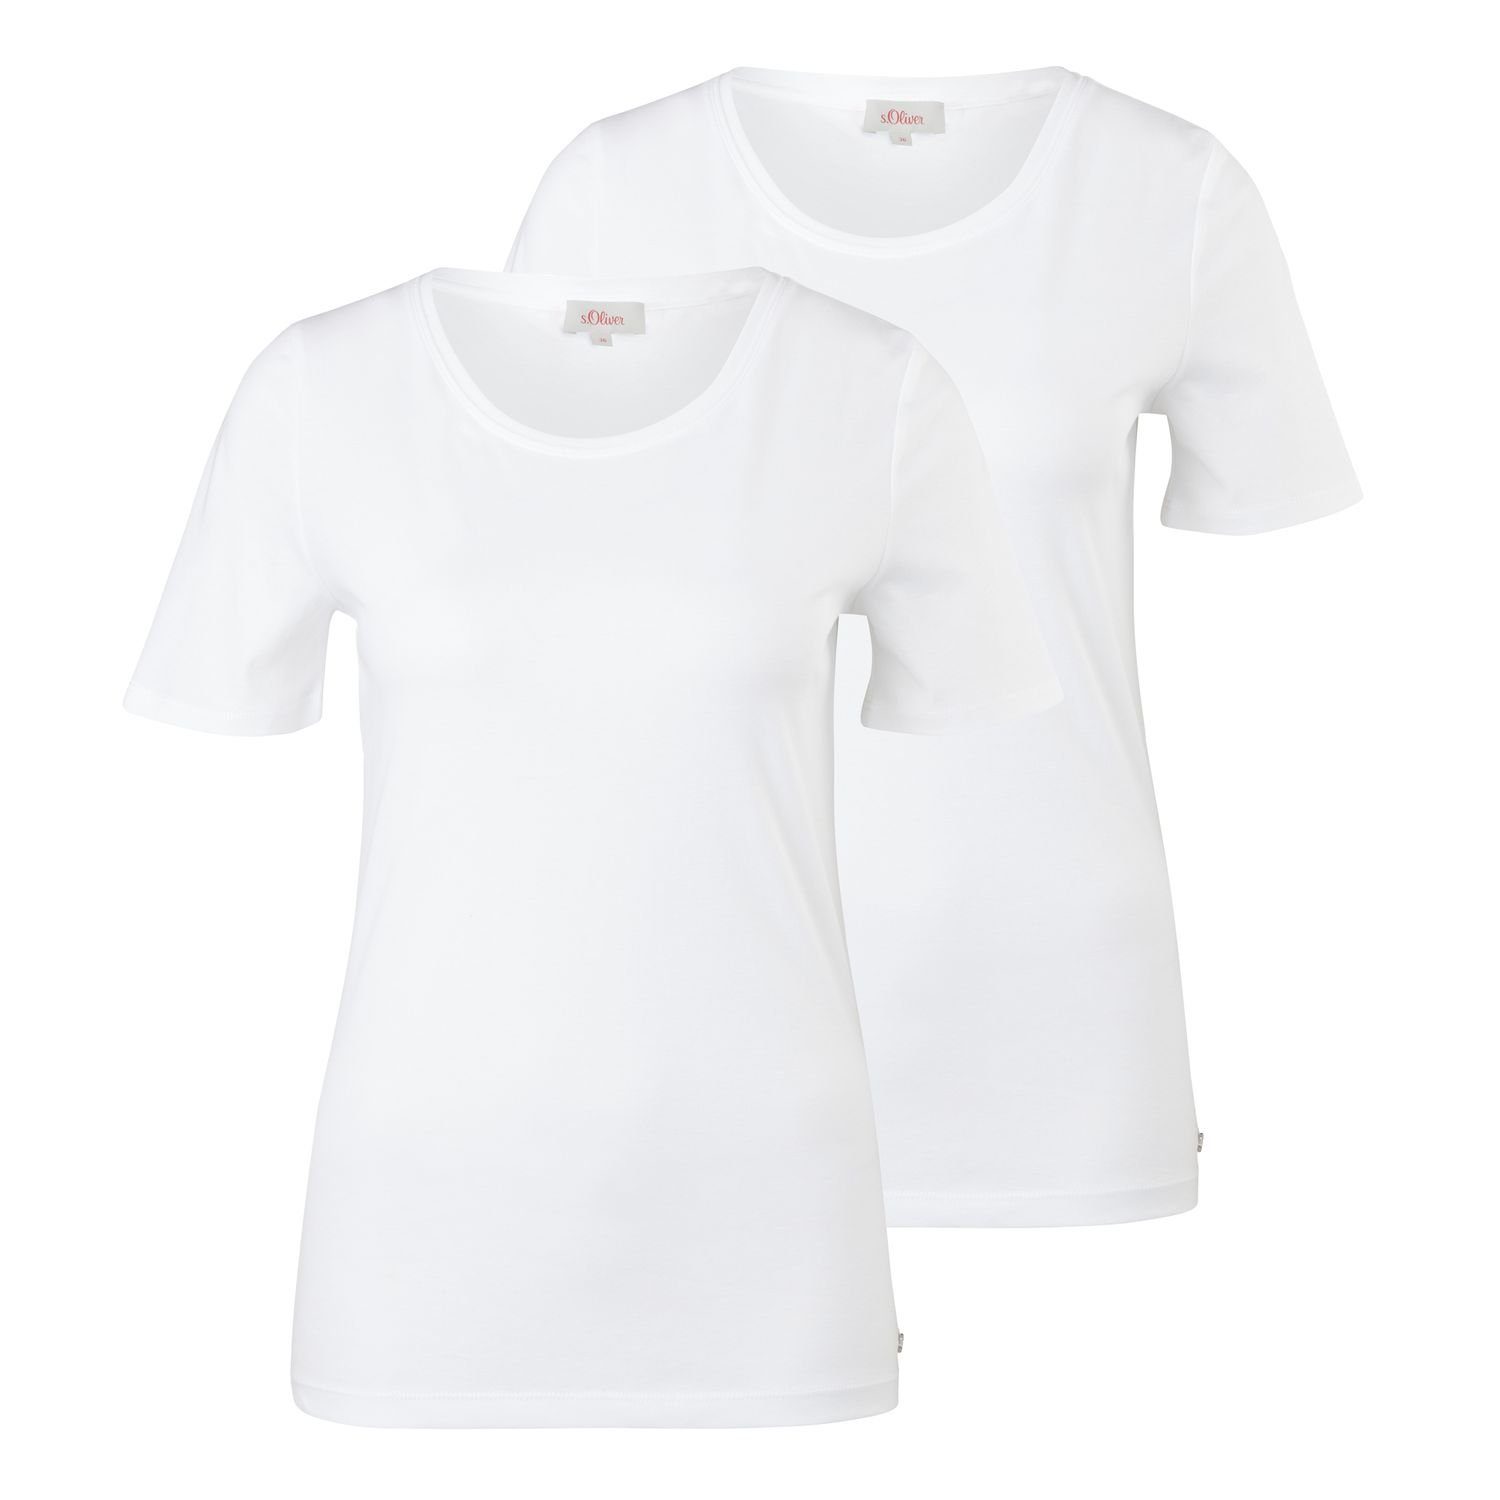 s.Oliver T-Shirt Basic aus softer Single-Jersey Qualität, Slim Fit, 2 Stück Weiß